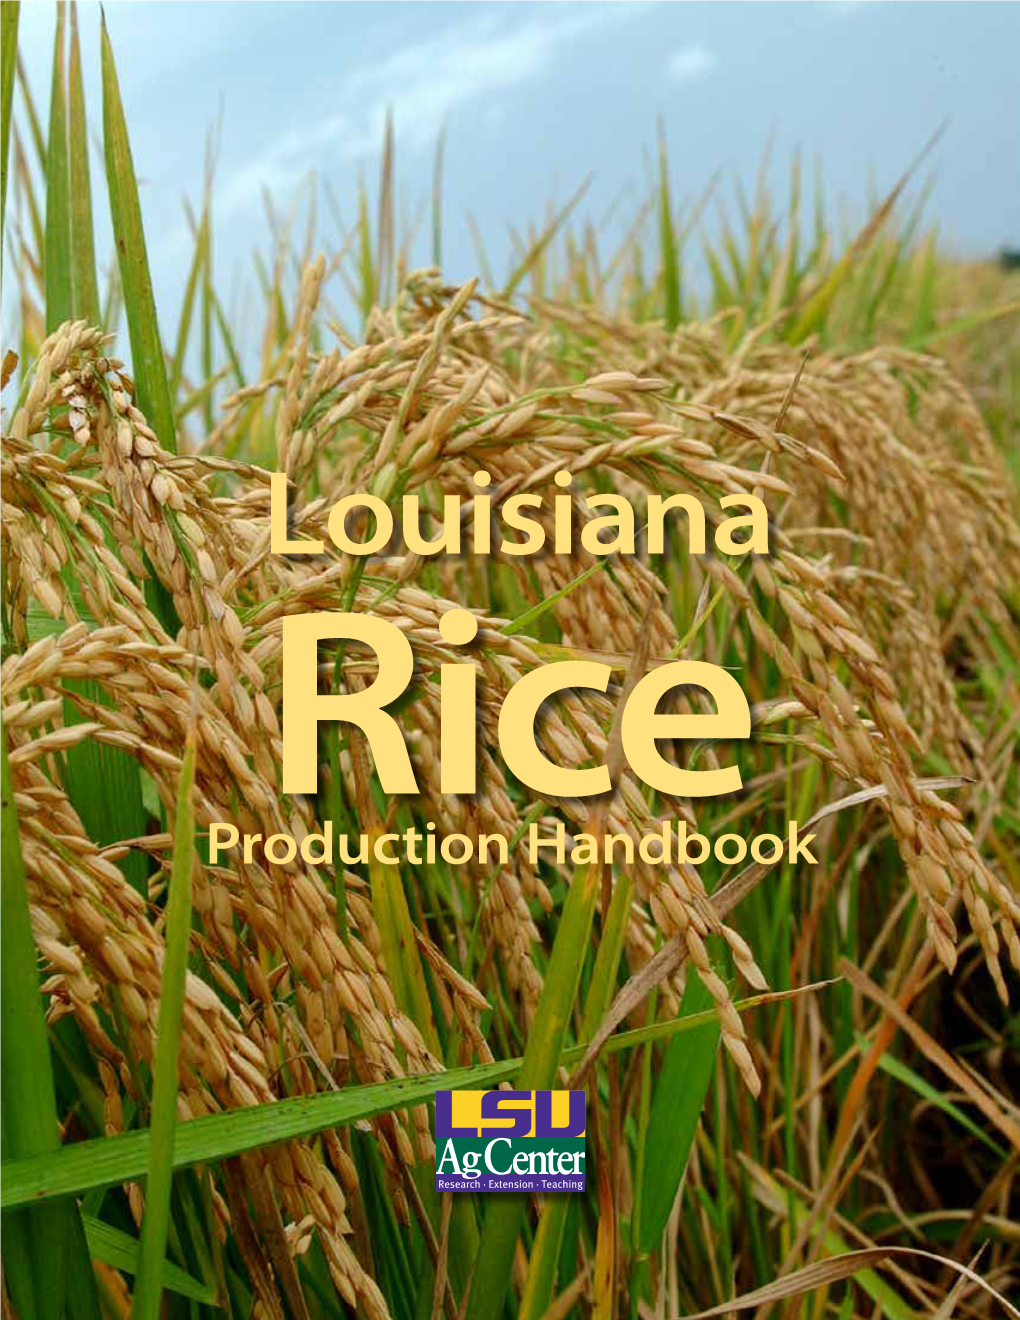 Production Handbook Inside Cover Blank Louisiana Rice Production Handbook